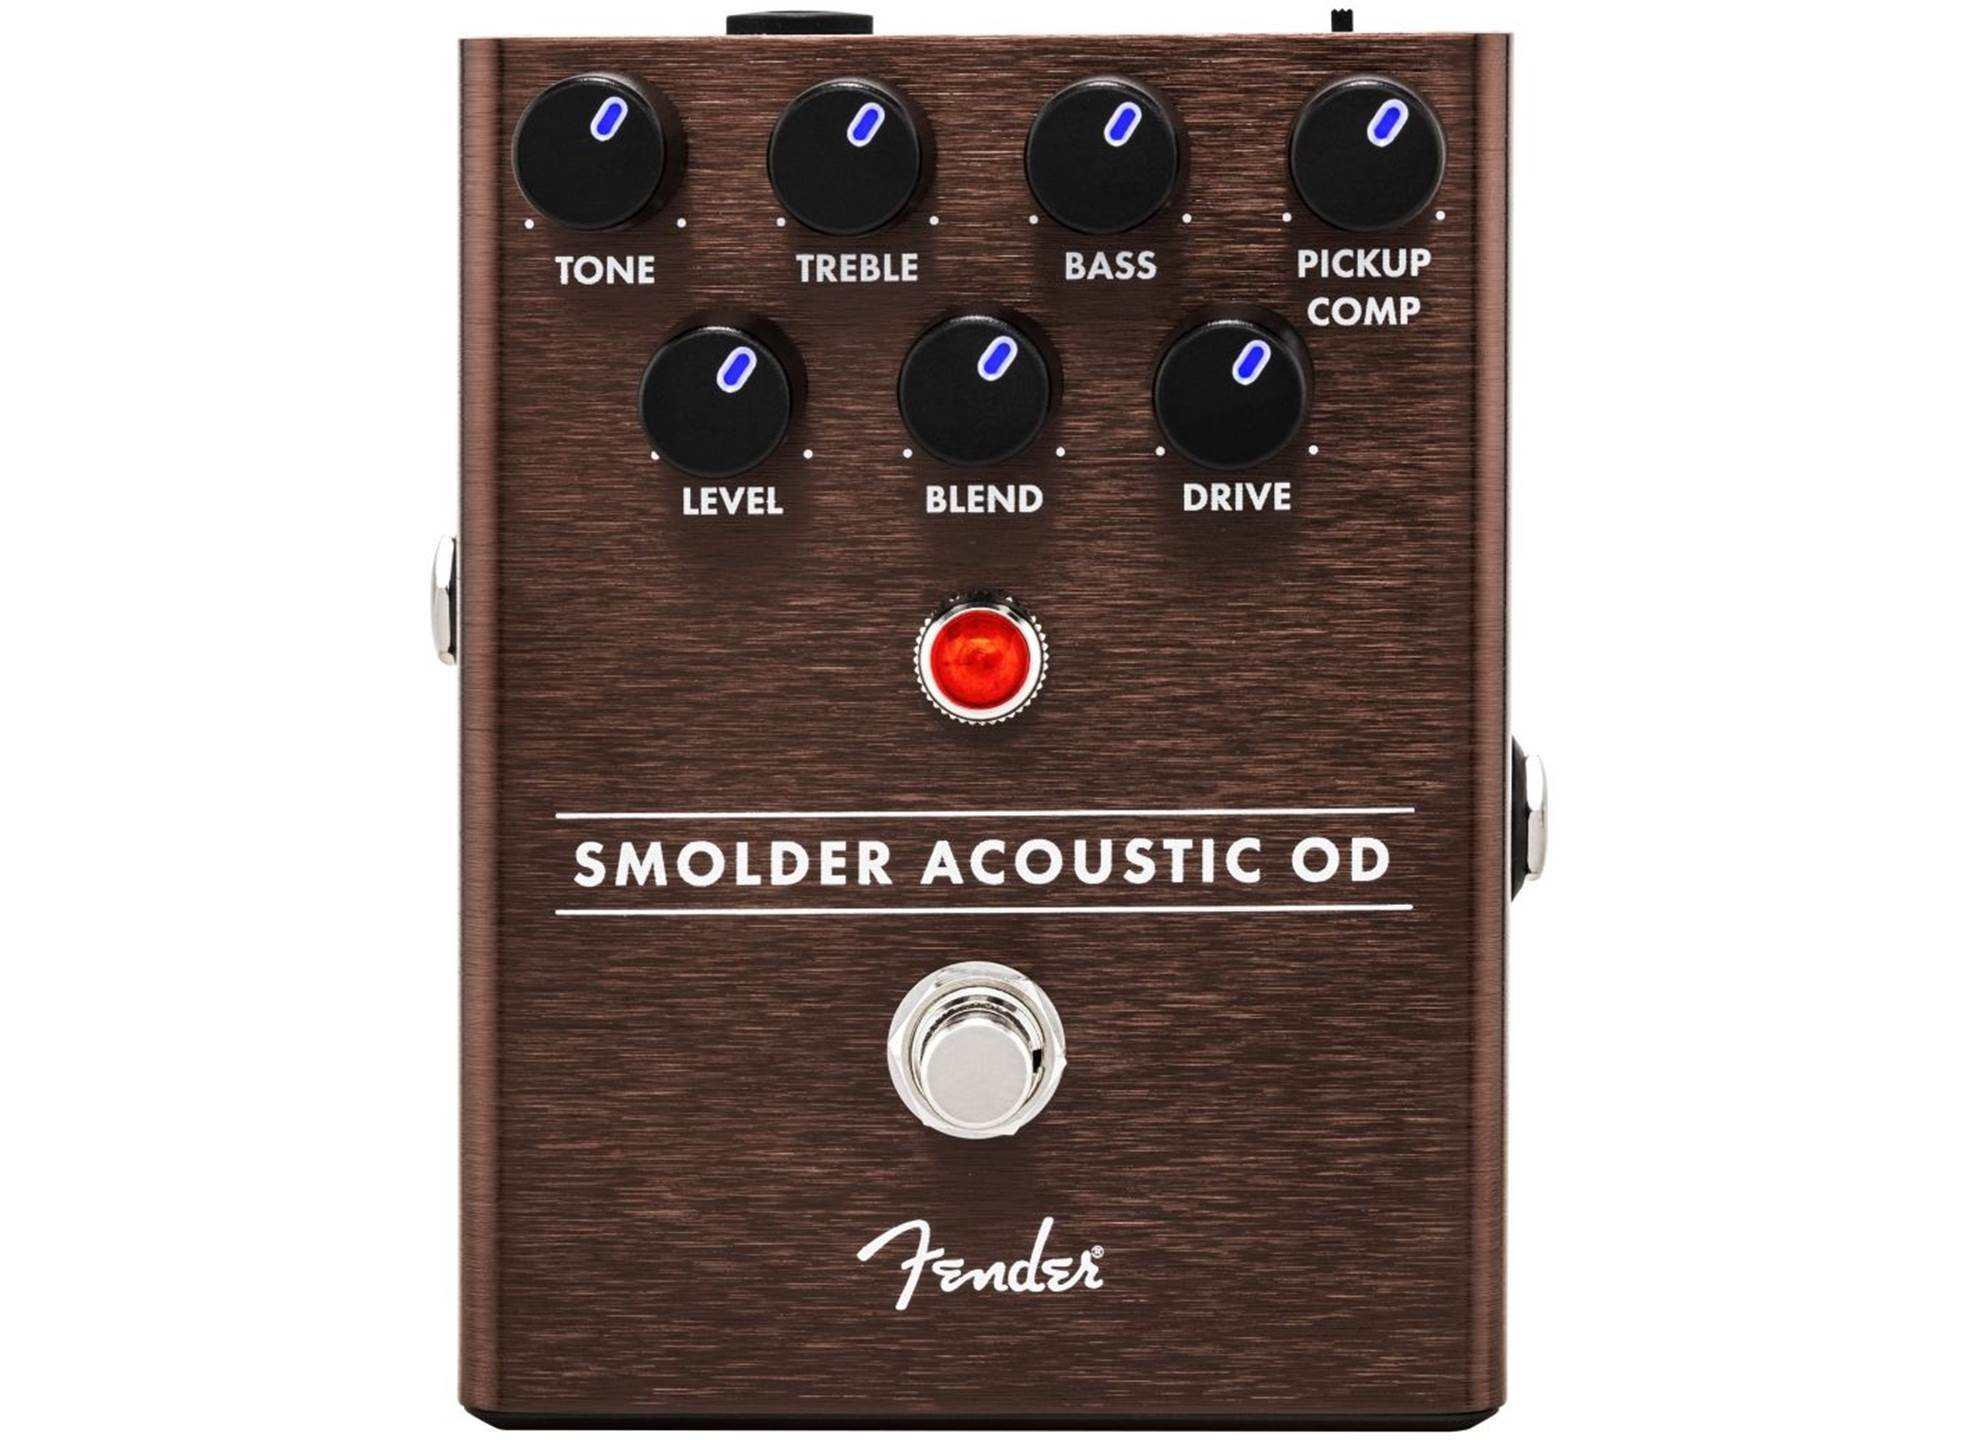 Smolder Acoustic OD